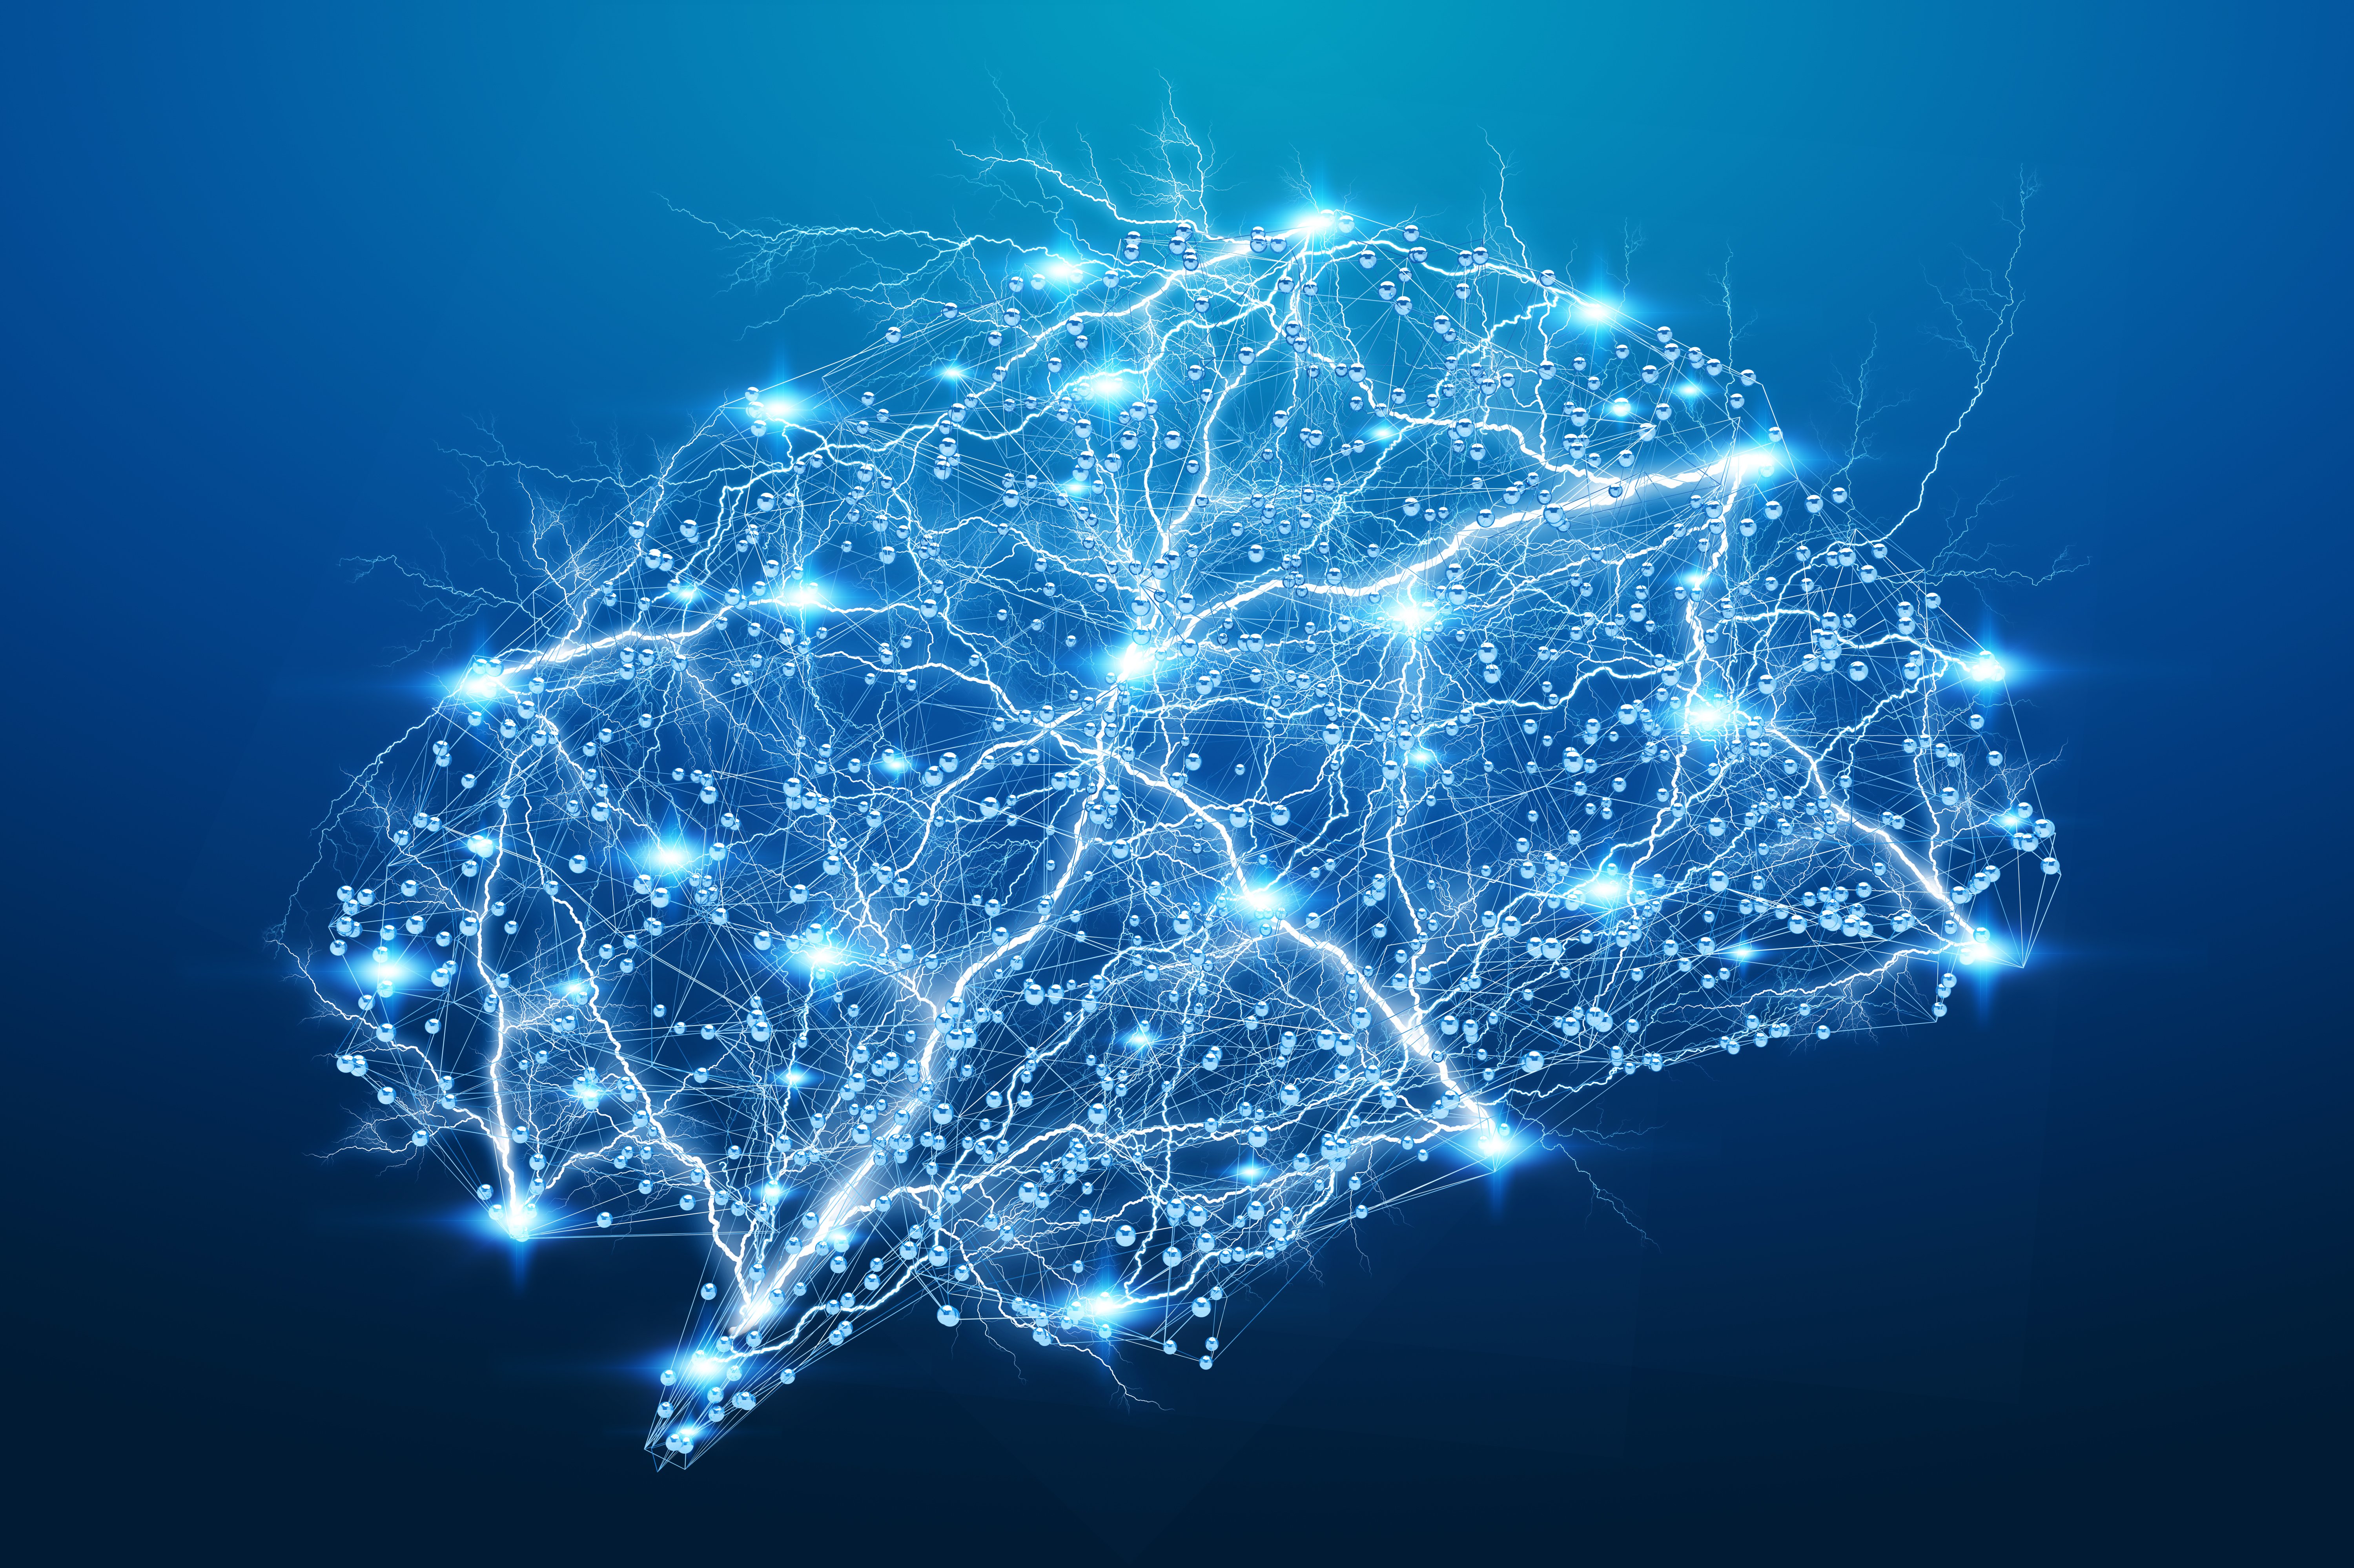 JPM23: Schrödinger expands neuroscience work with BMS, Otsuka partnerships